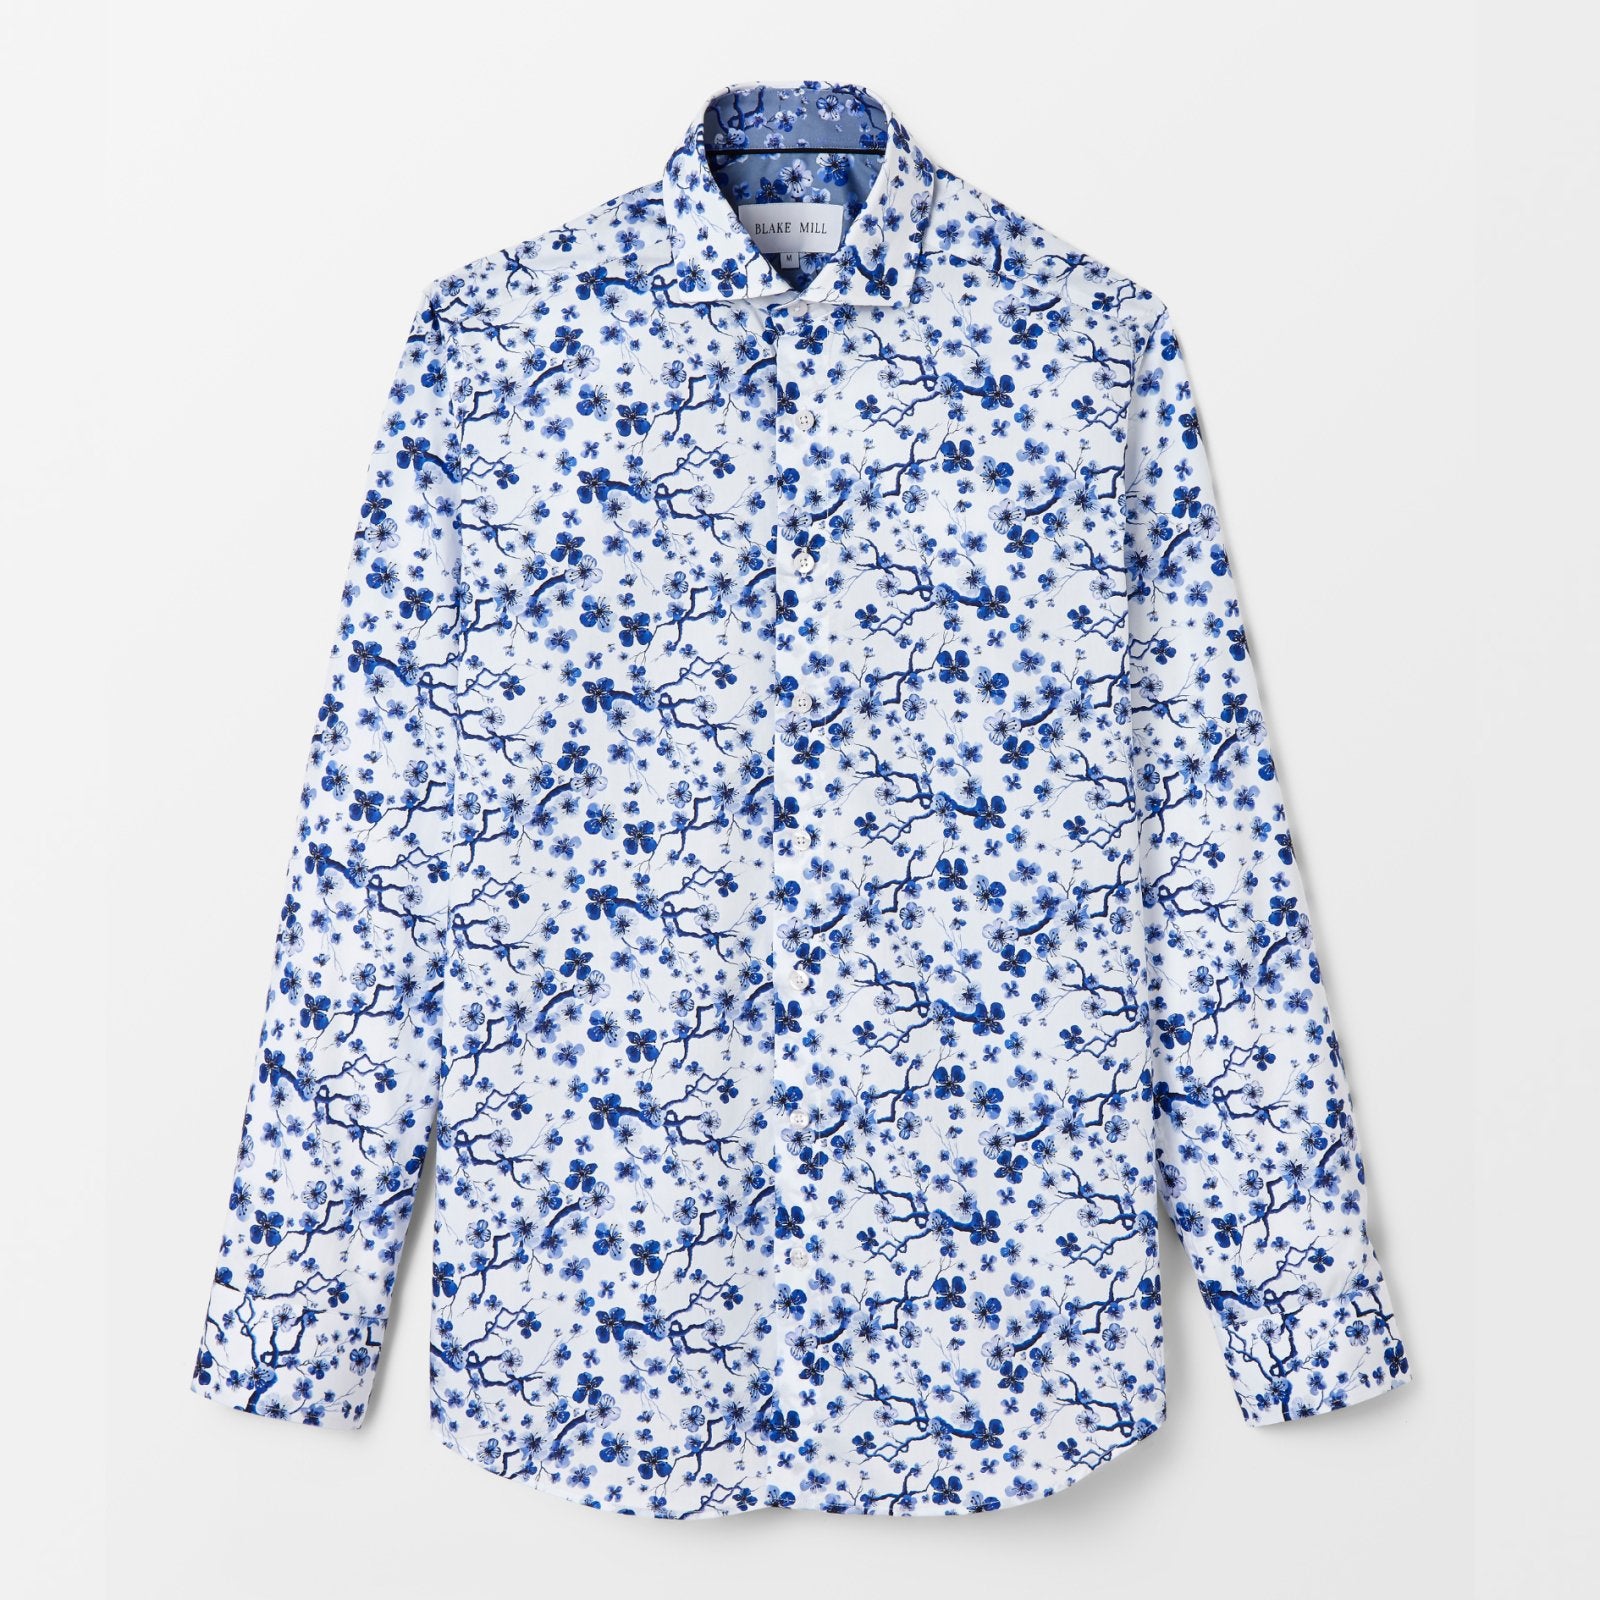 Mens Dark Blue Shirt with 'Sakura Tree' Print | Blake Mill